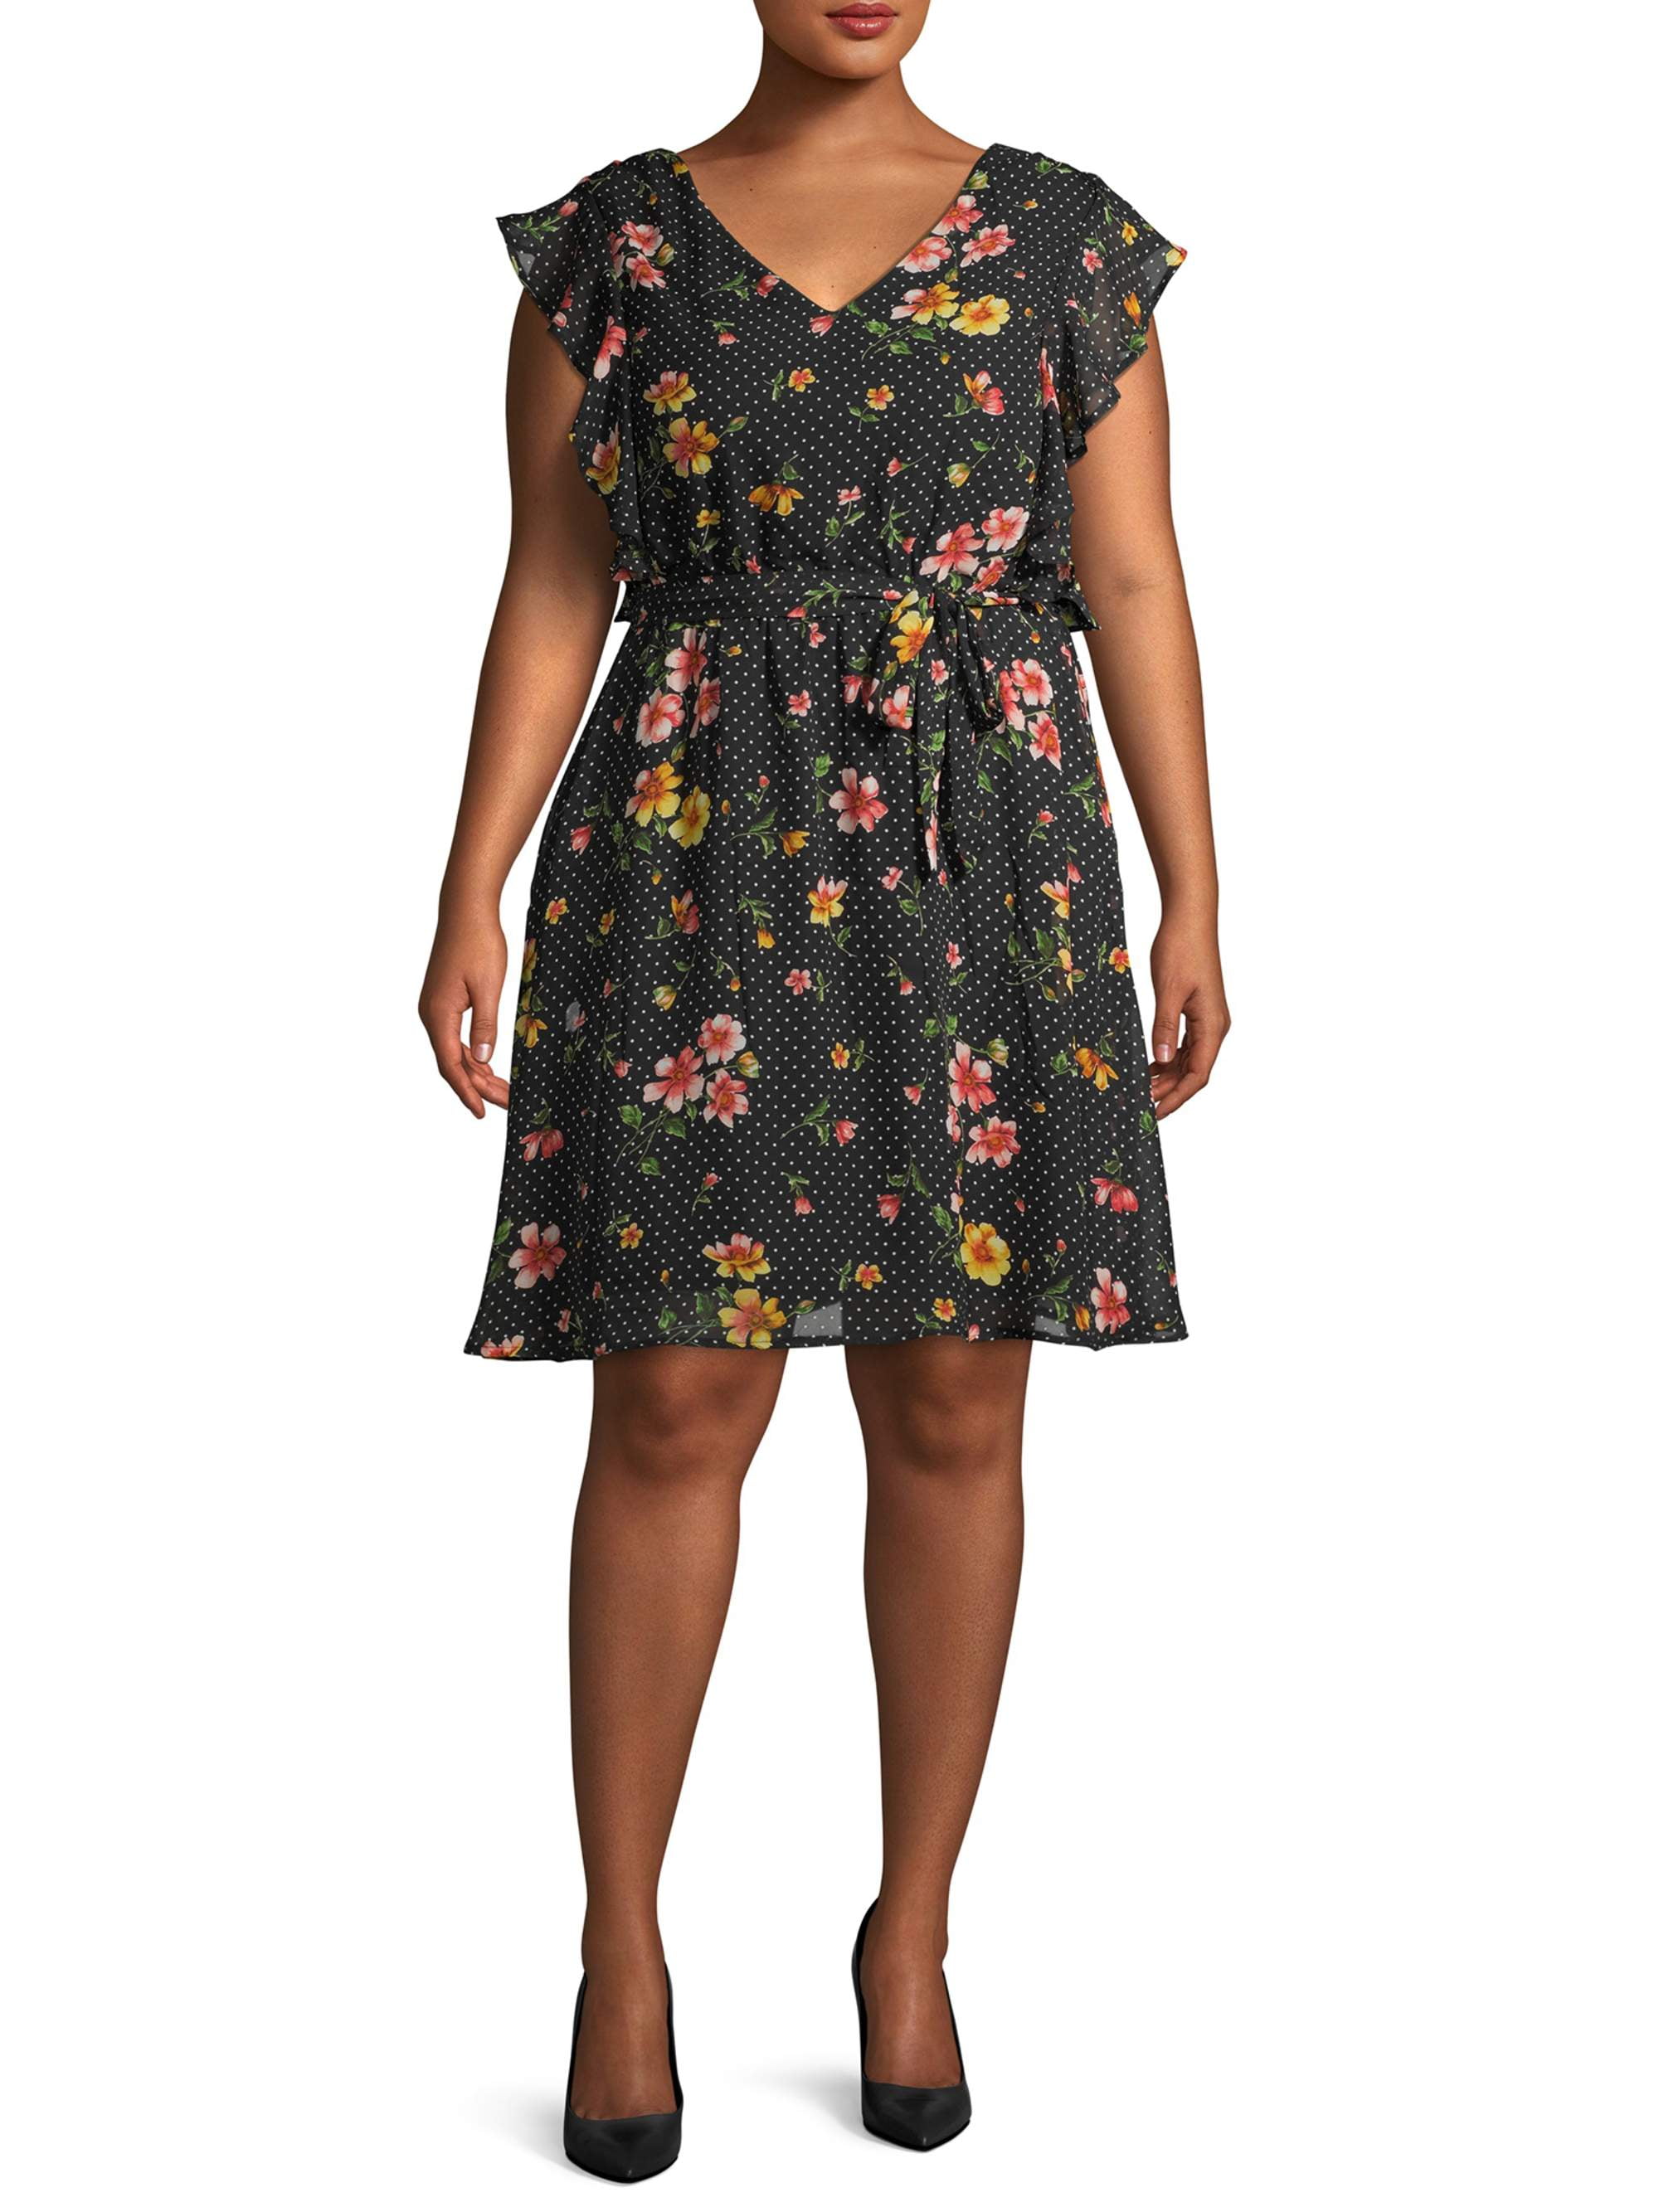 Wrapper Women's Plus Size Fit and Flare Ruffle Trim Dress - Walmart.com